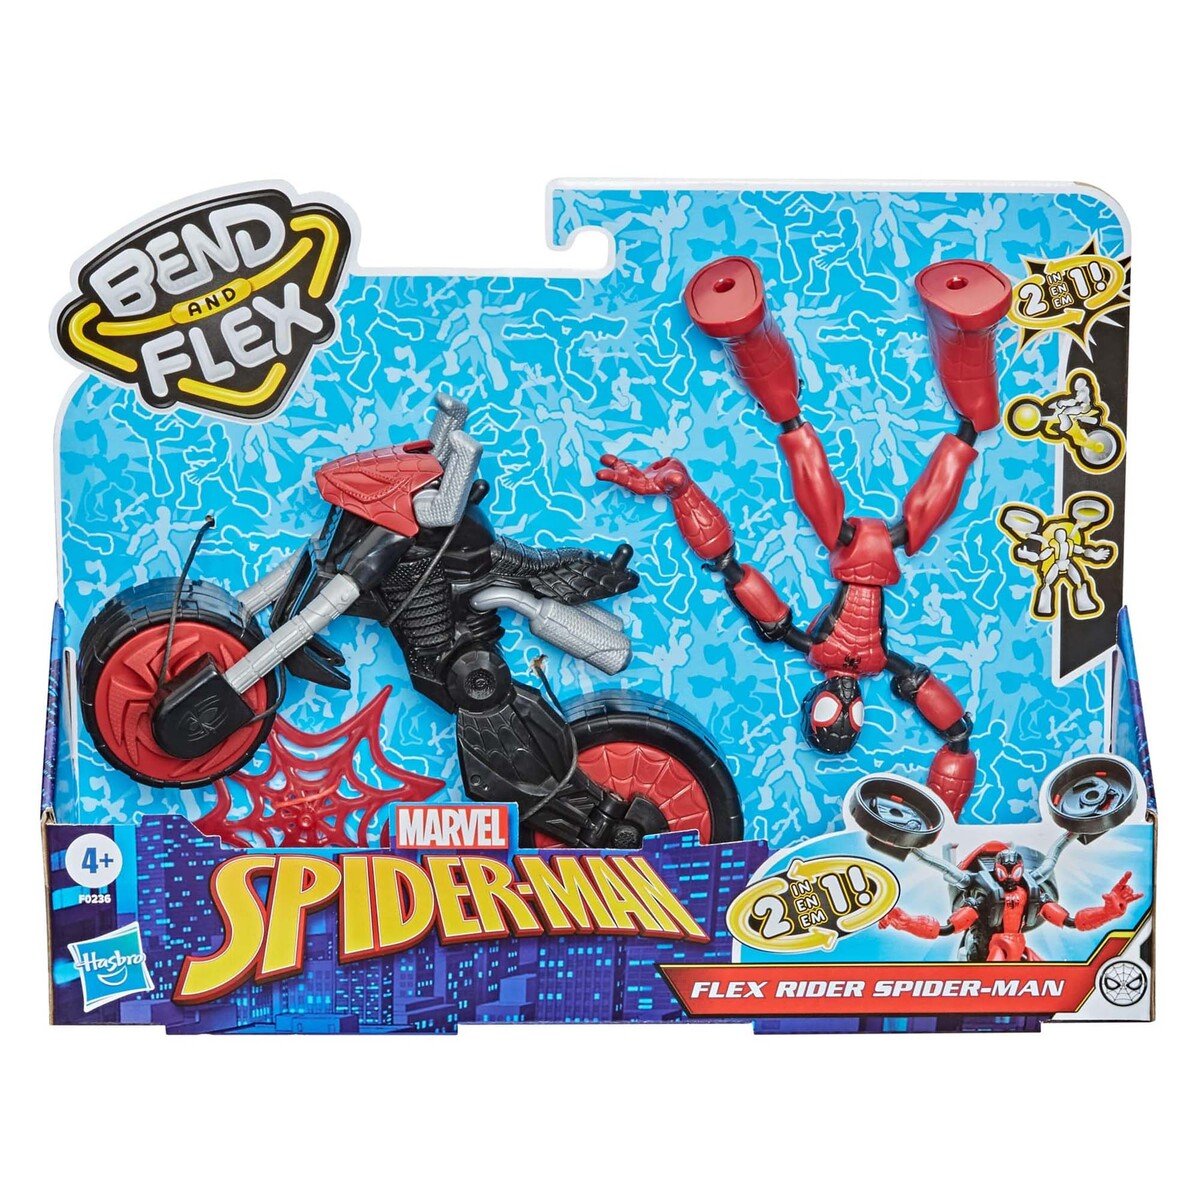 Spiderman Action Figure F0236